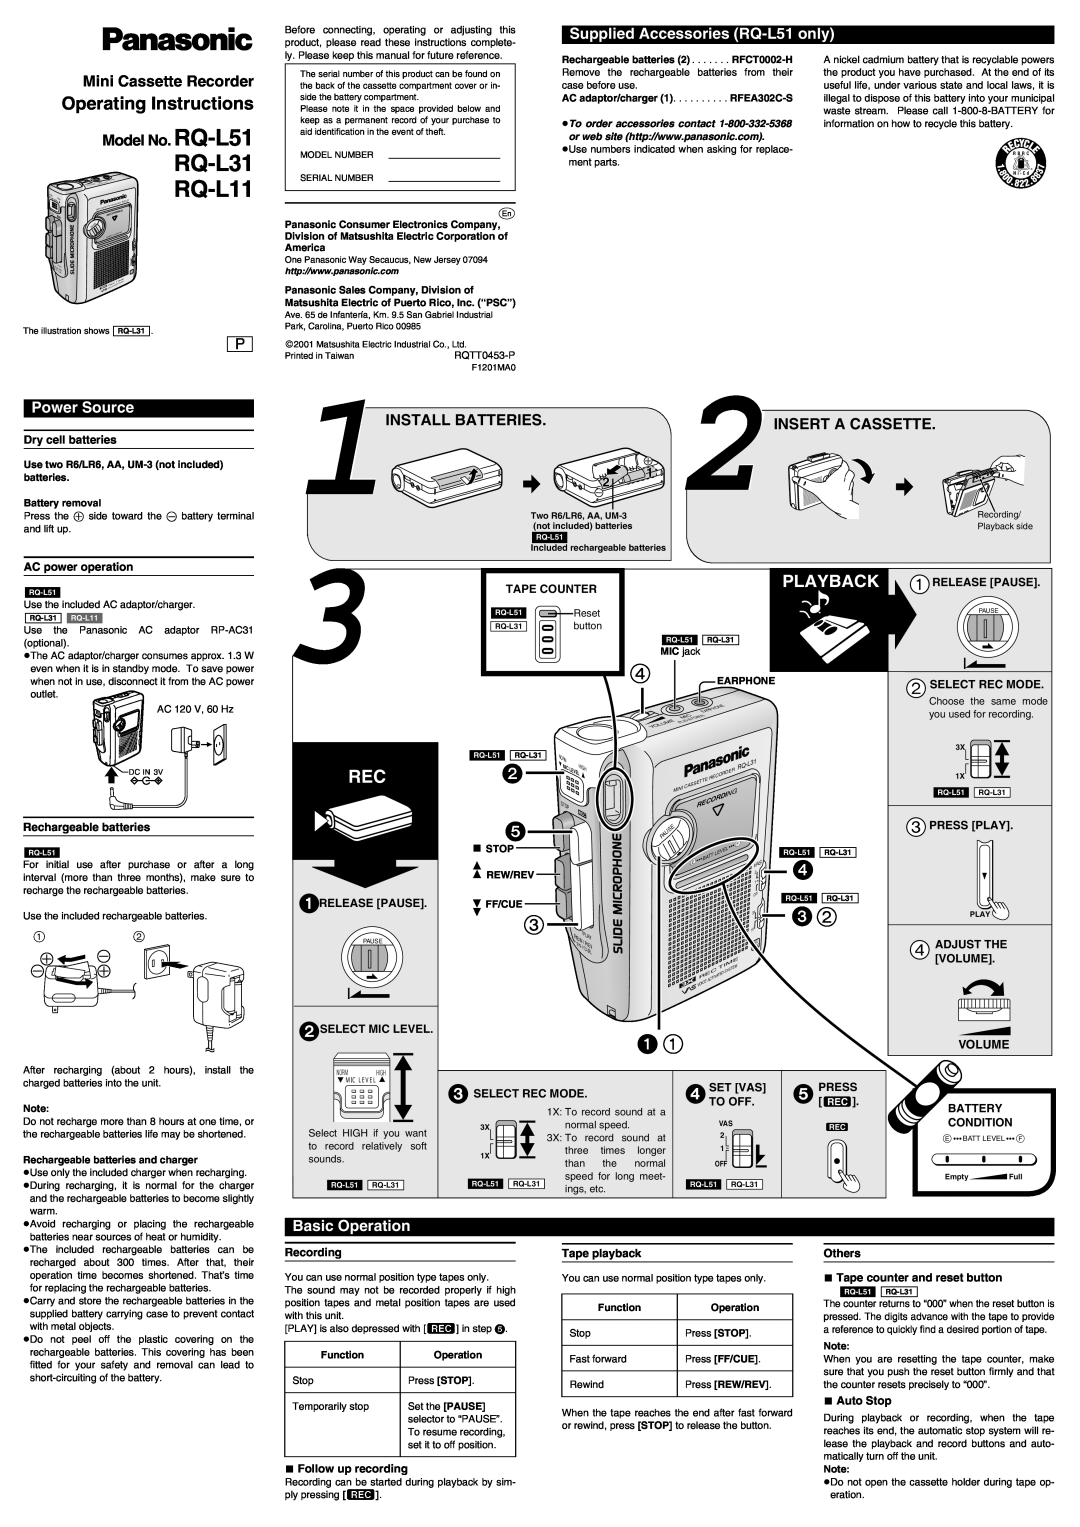 Panasonic RQ-L31 operating instructions Operating Instructions, Mini Cassette Recorder, Model No. RQ-L51, Power Source 